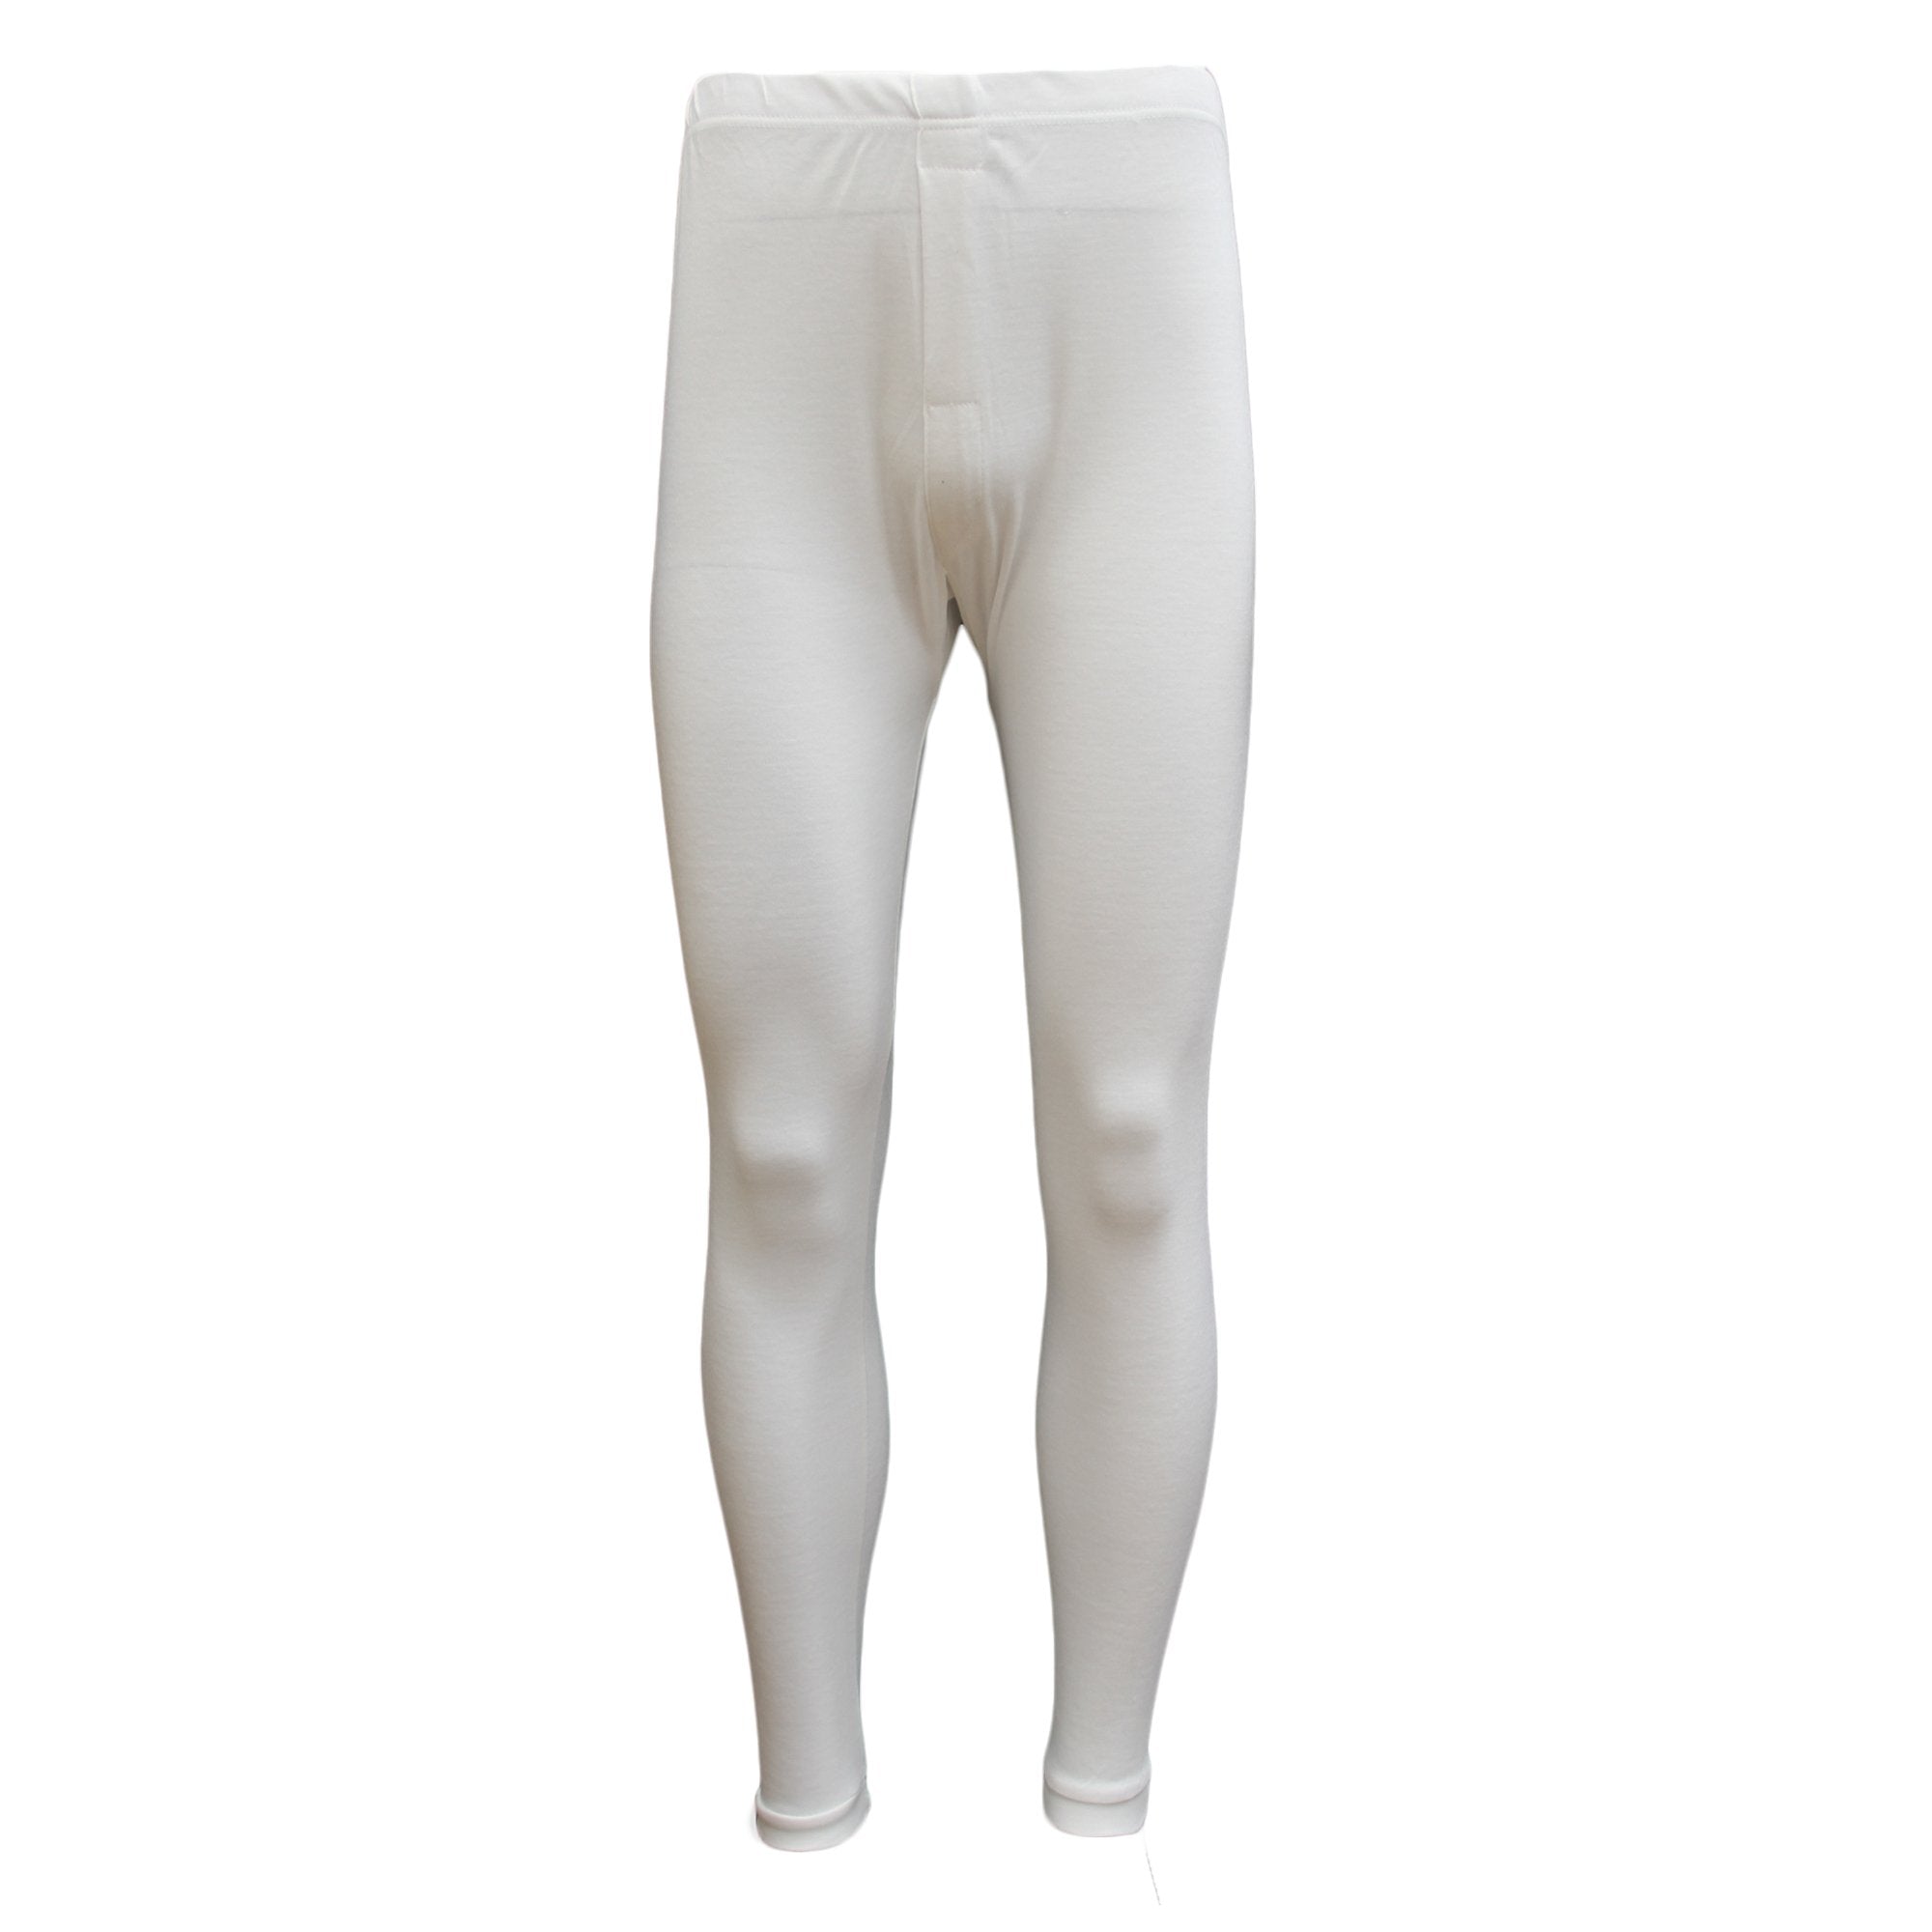 Mens Merino Wool Top Pants Thermal Leggings Long Johns Underwear Pajamas, Men's Long Johns - Beige, M